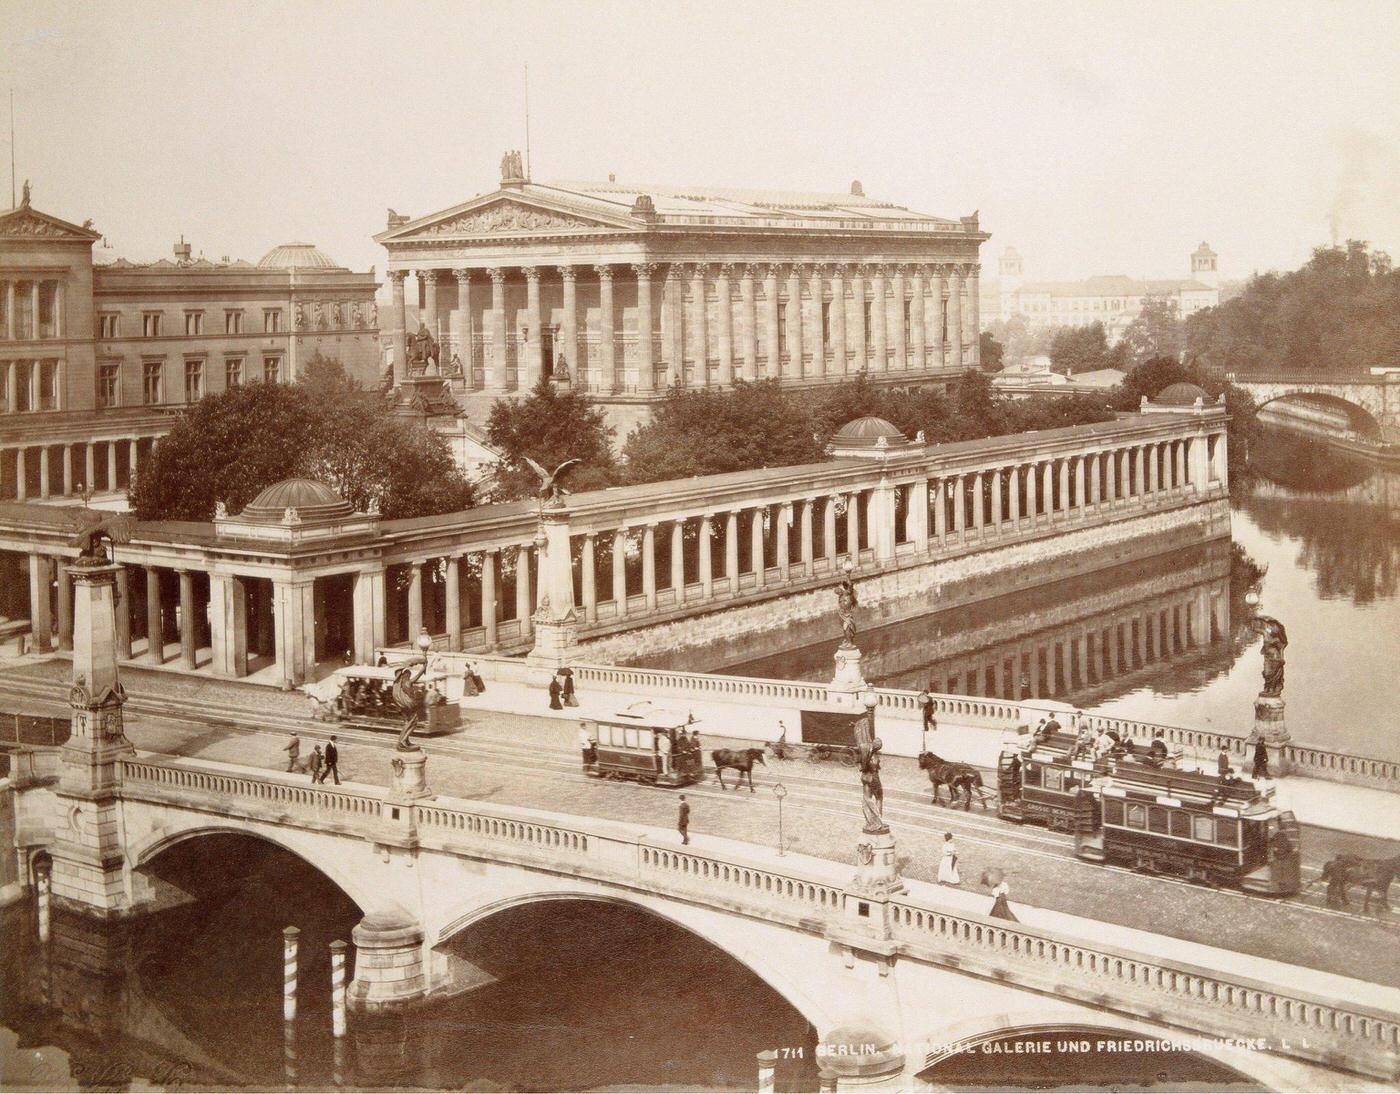 National Gallery and Friedrichstrasse in Berlin, 1890.